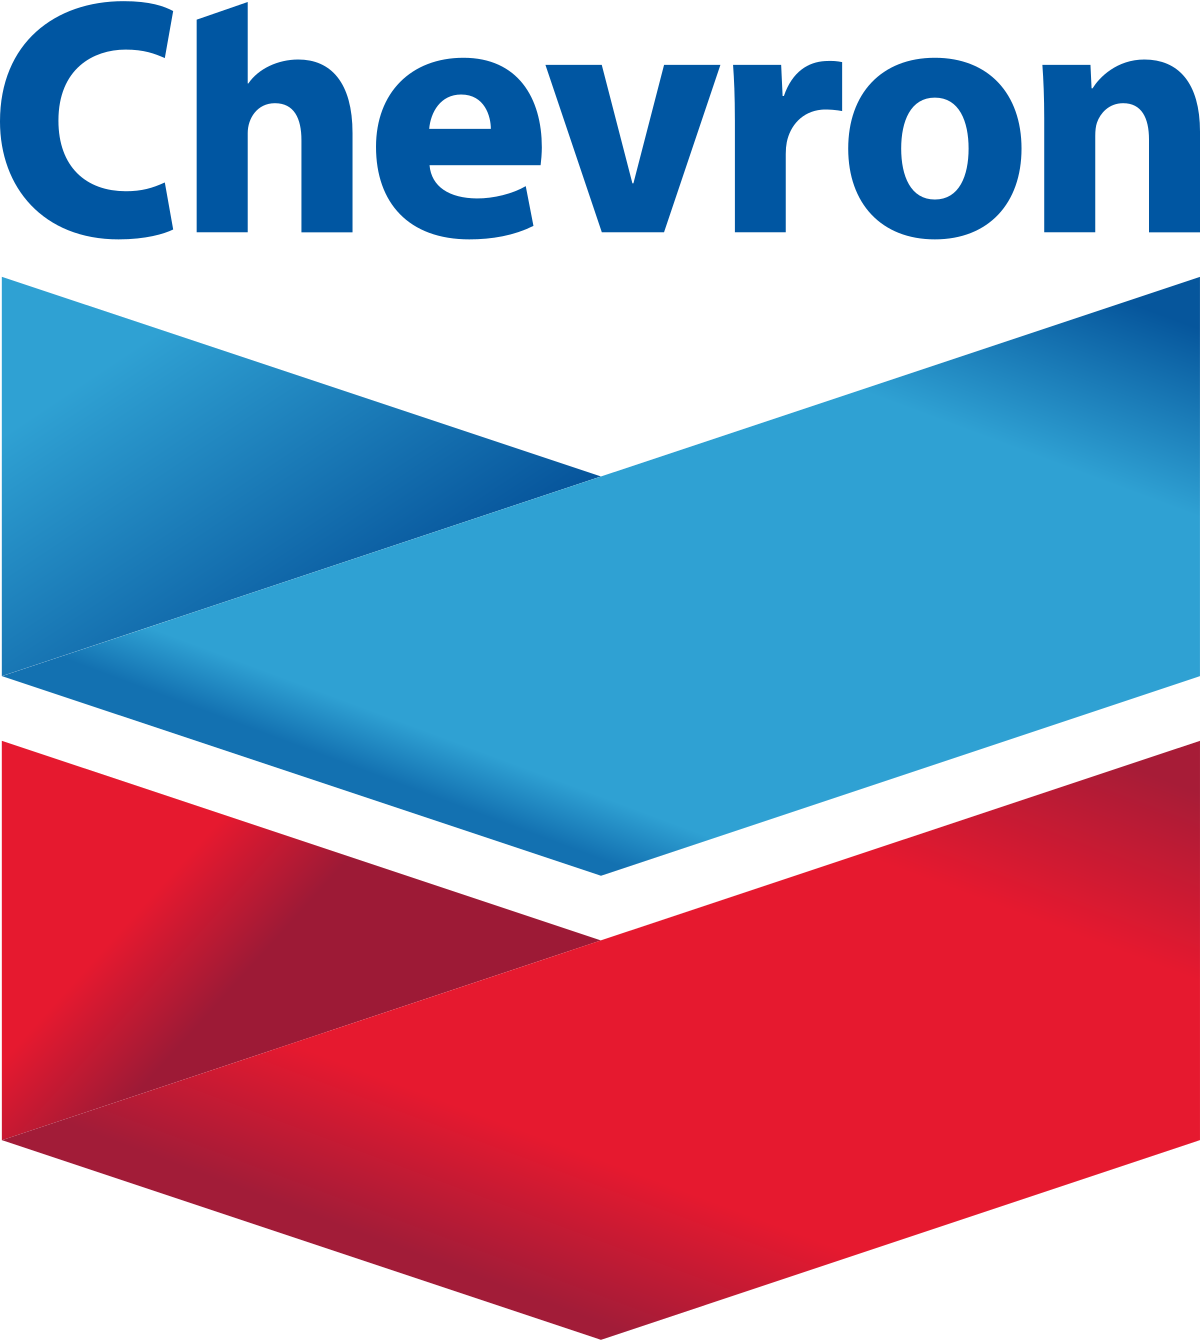 Venezuela's PDVSA, Chevron to address joint venture workers after license